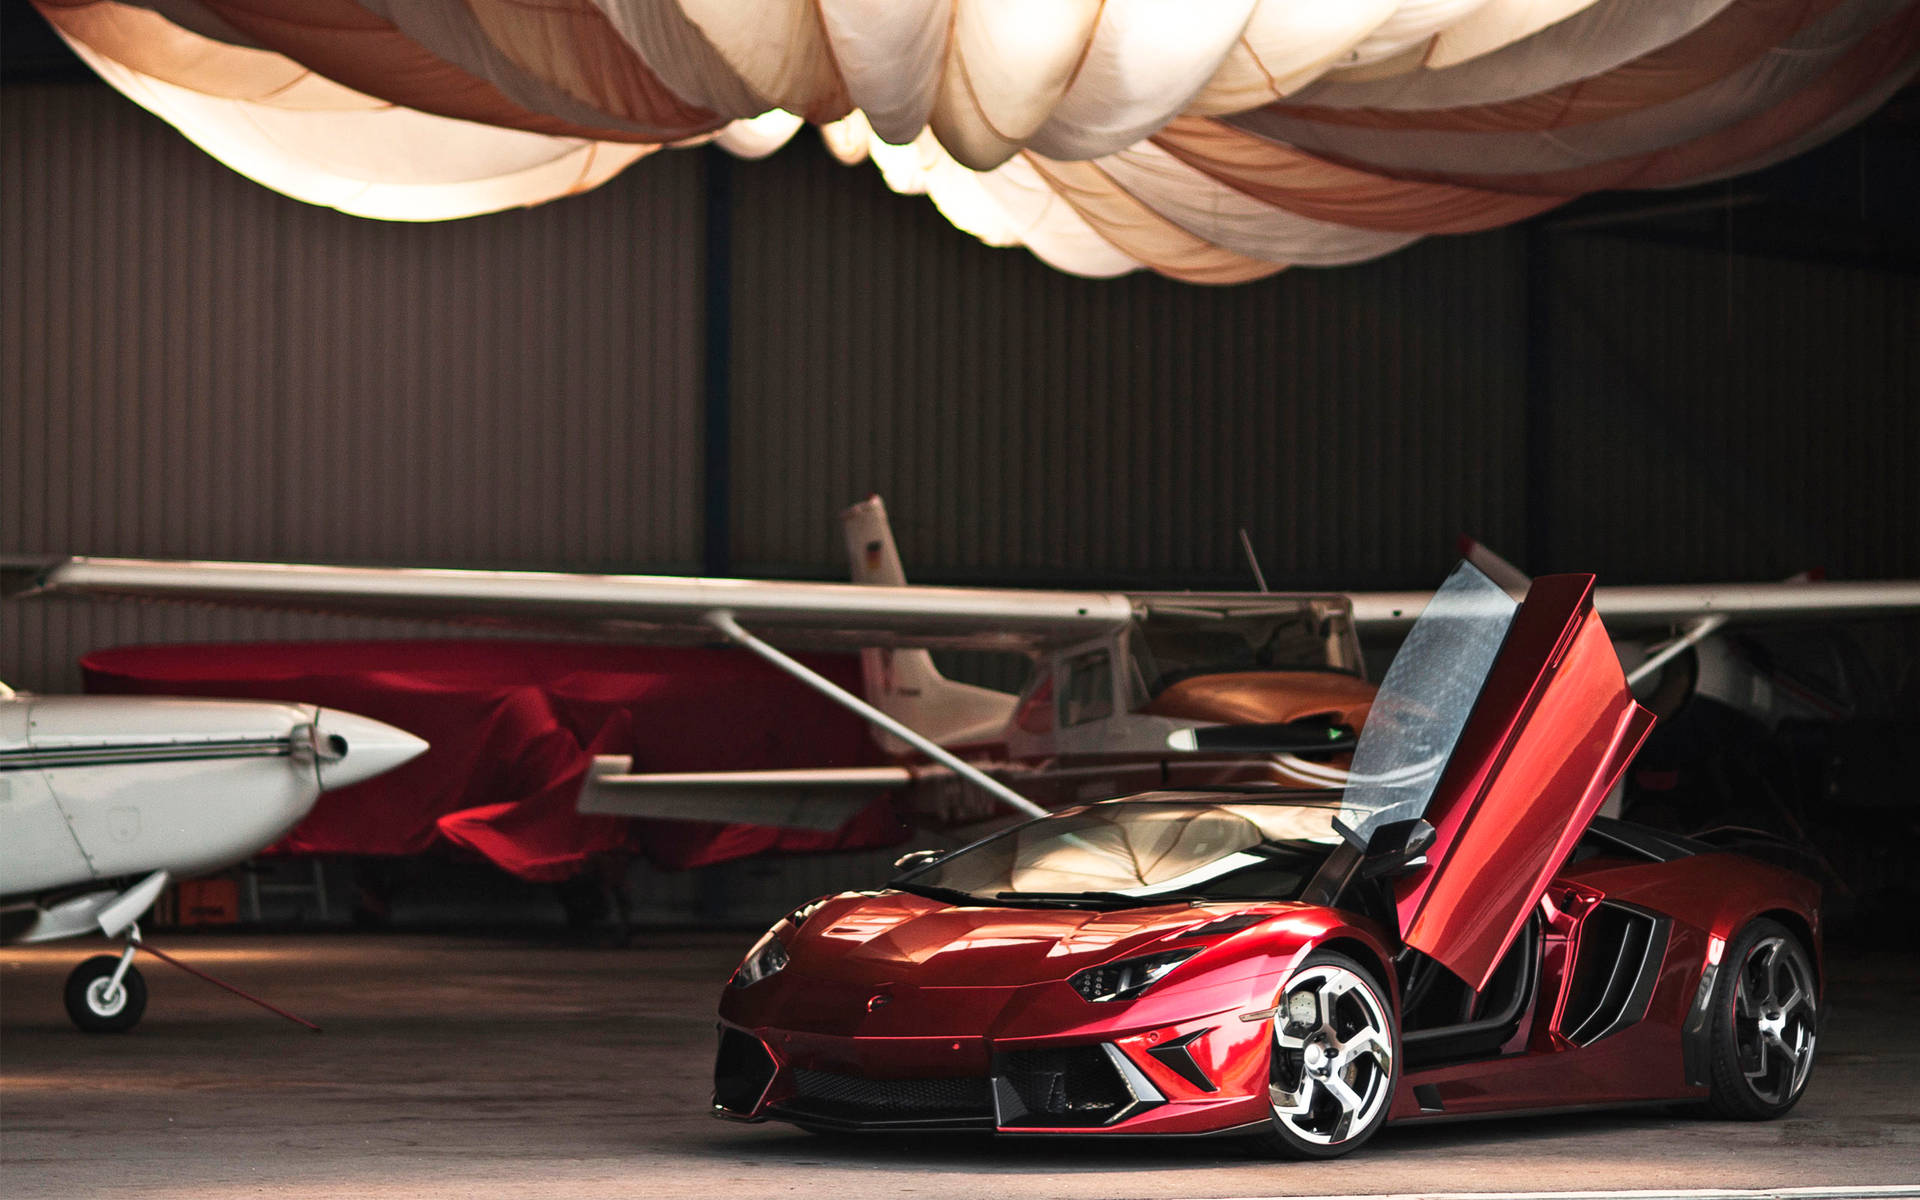 4k Lamborghini Aventador In A Hangar